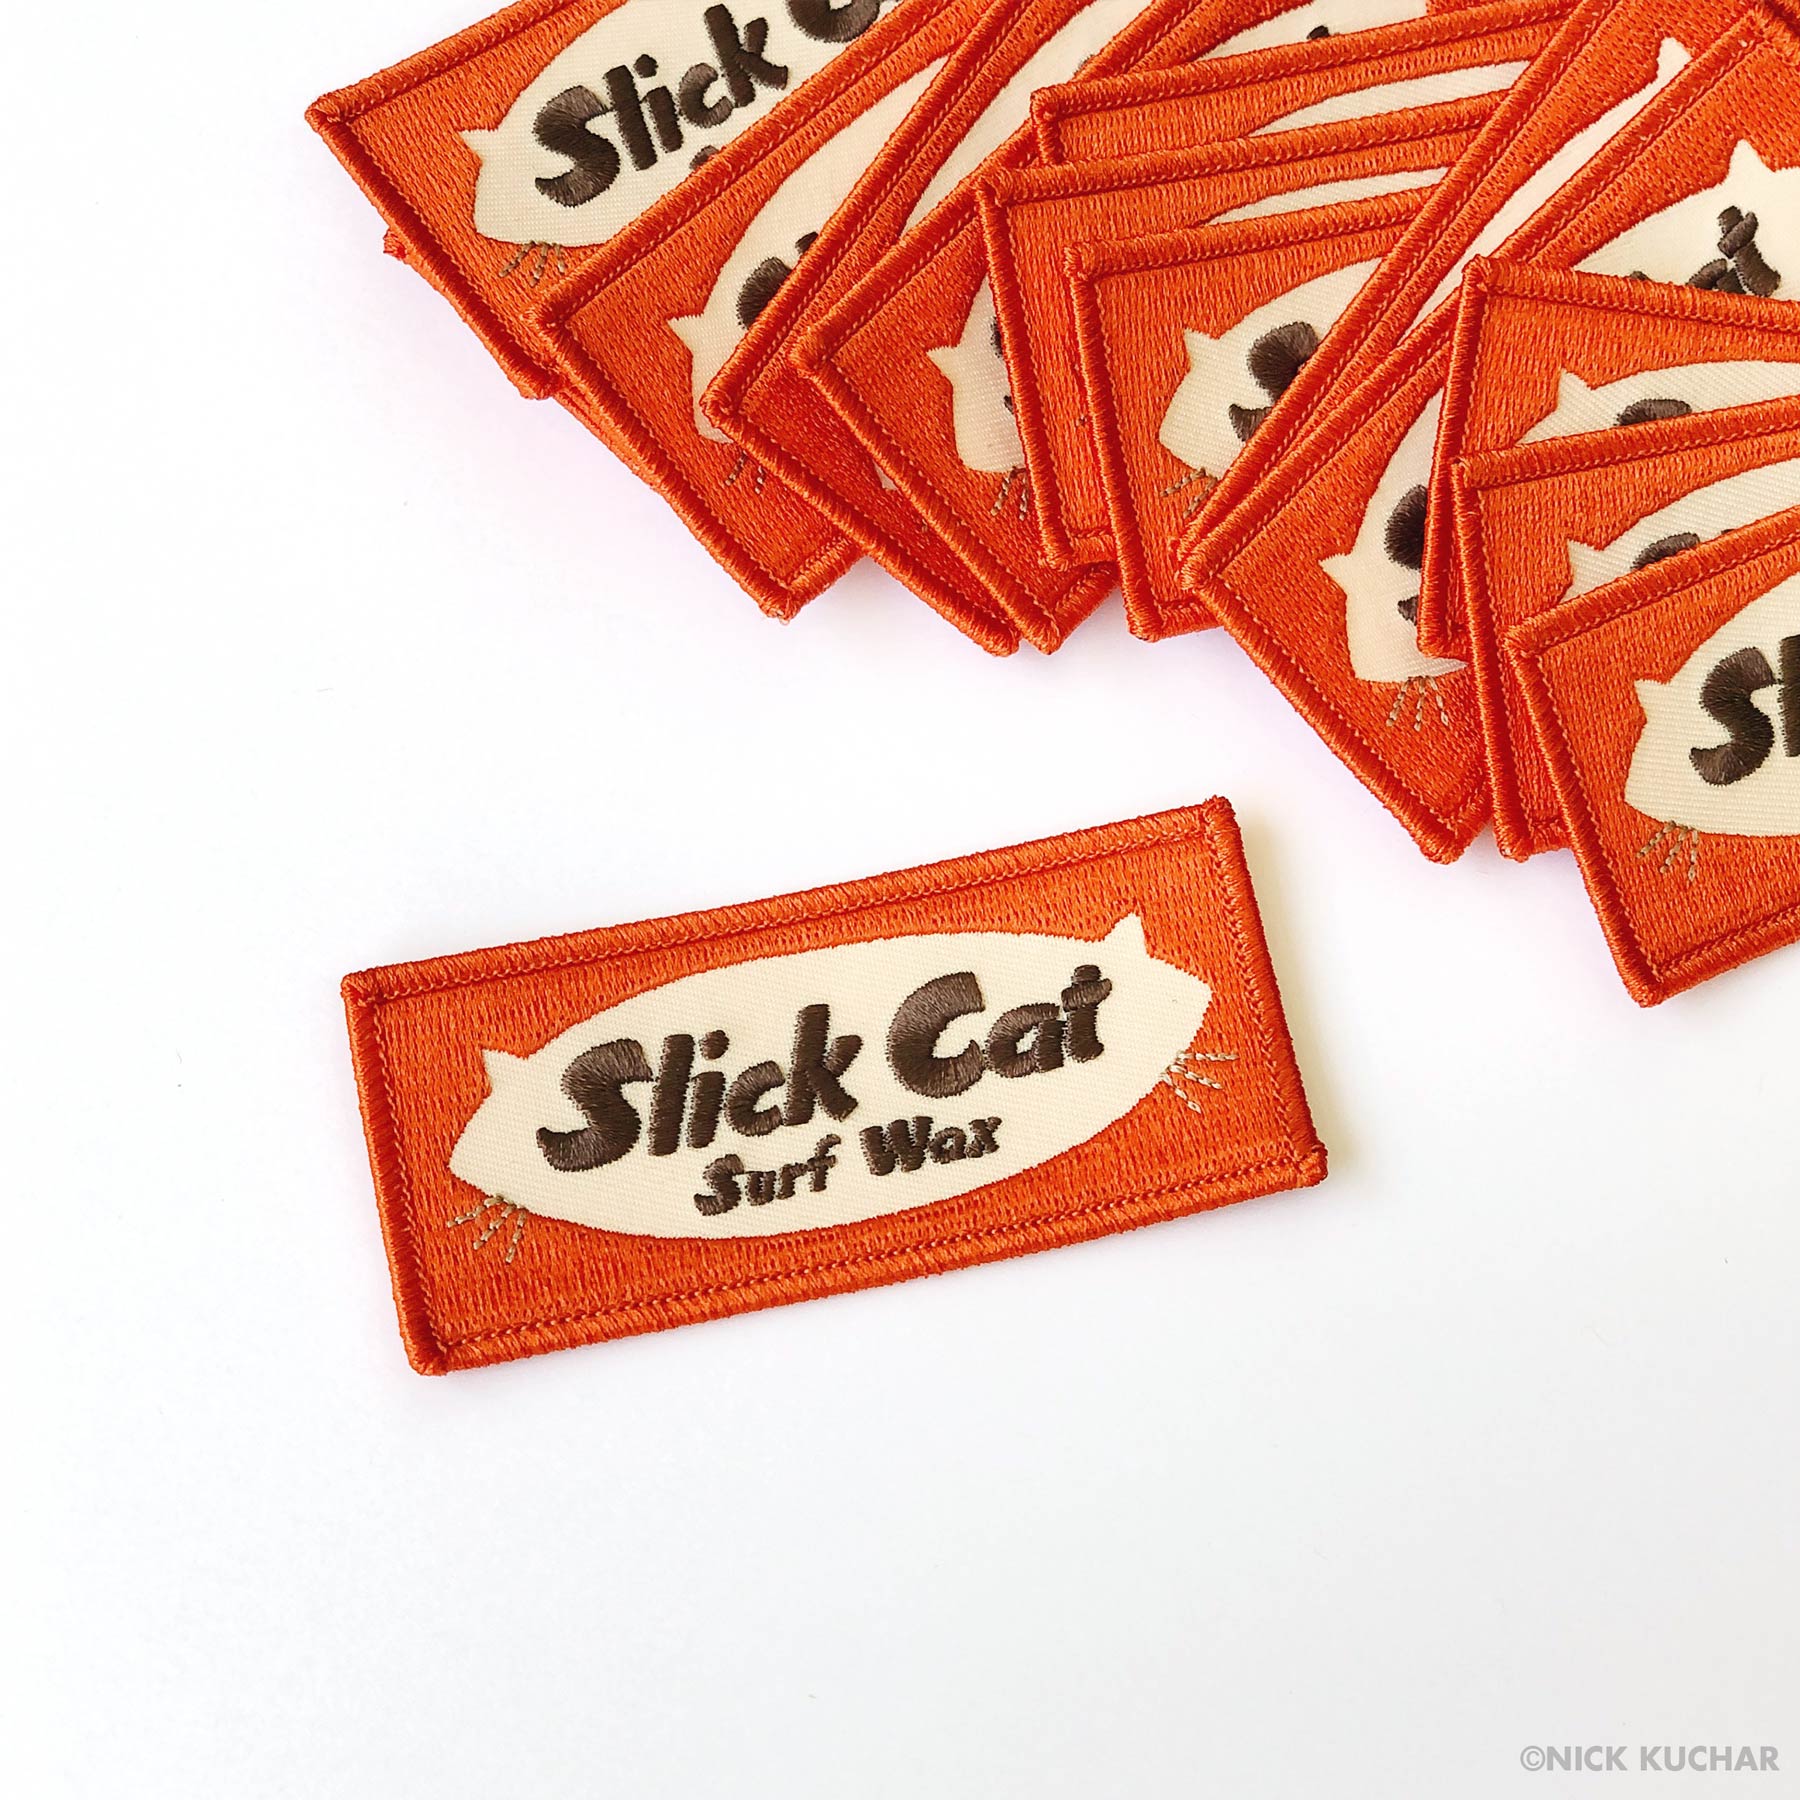 slick cat surf wax orange embroidered patch by Nick Kuchar